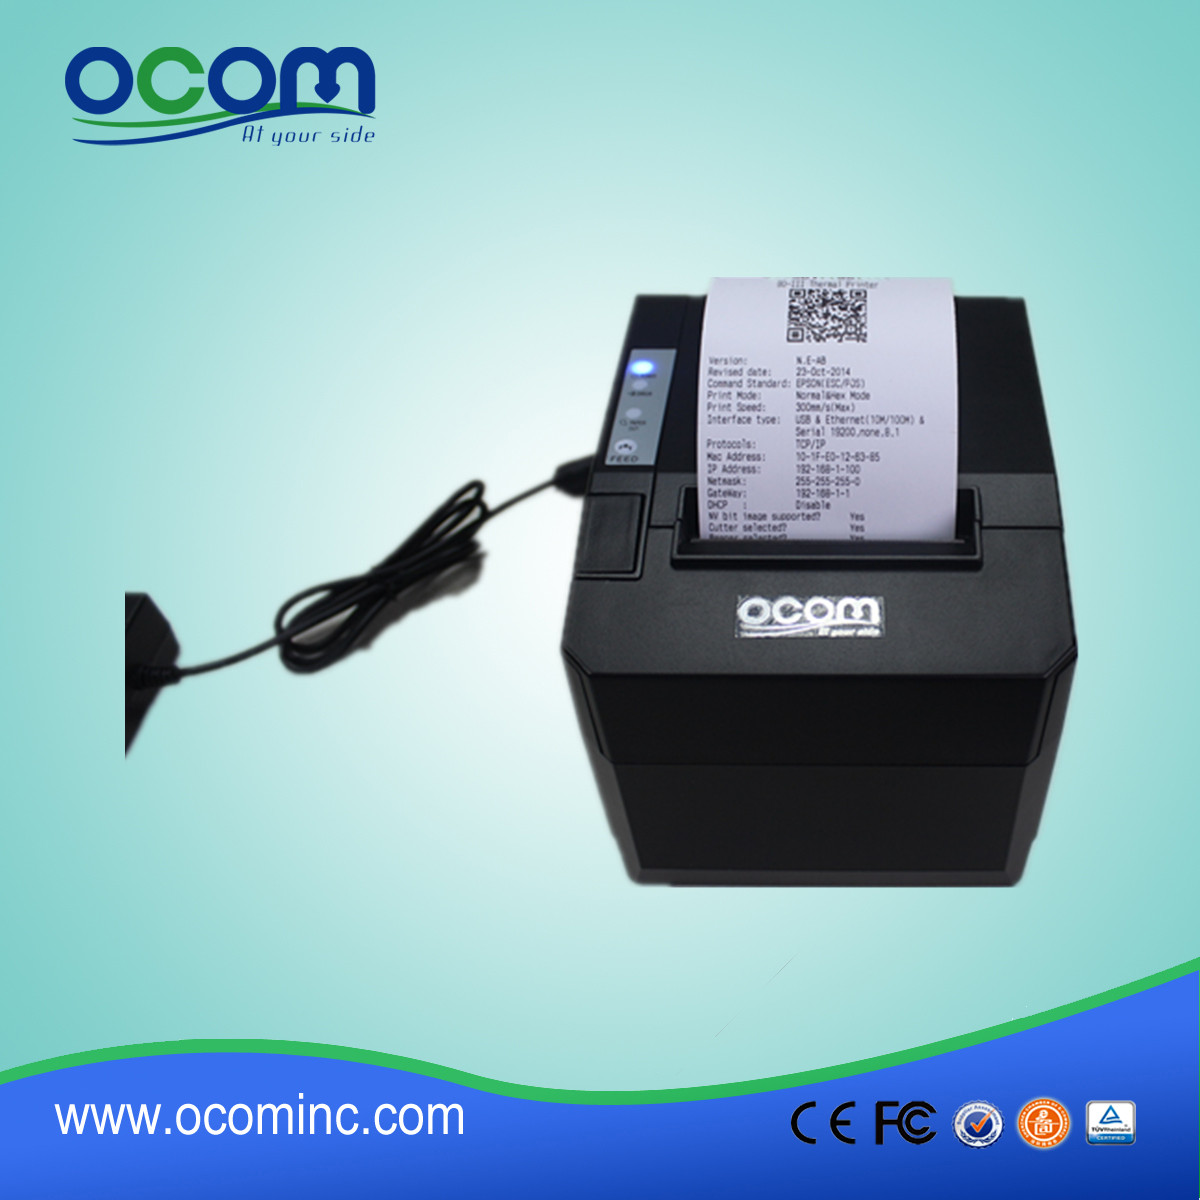 OCOM Cheap 80mm Pos Thermal Receipt Printer